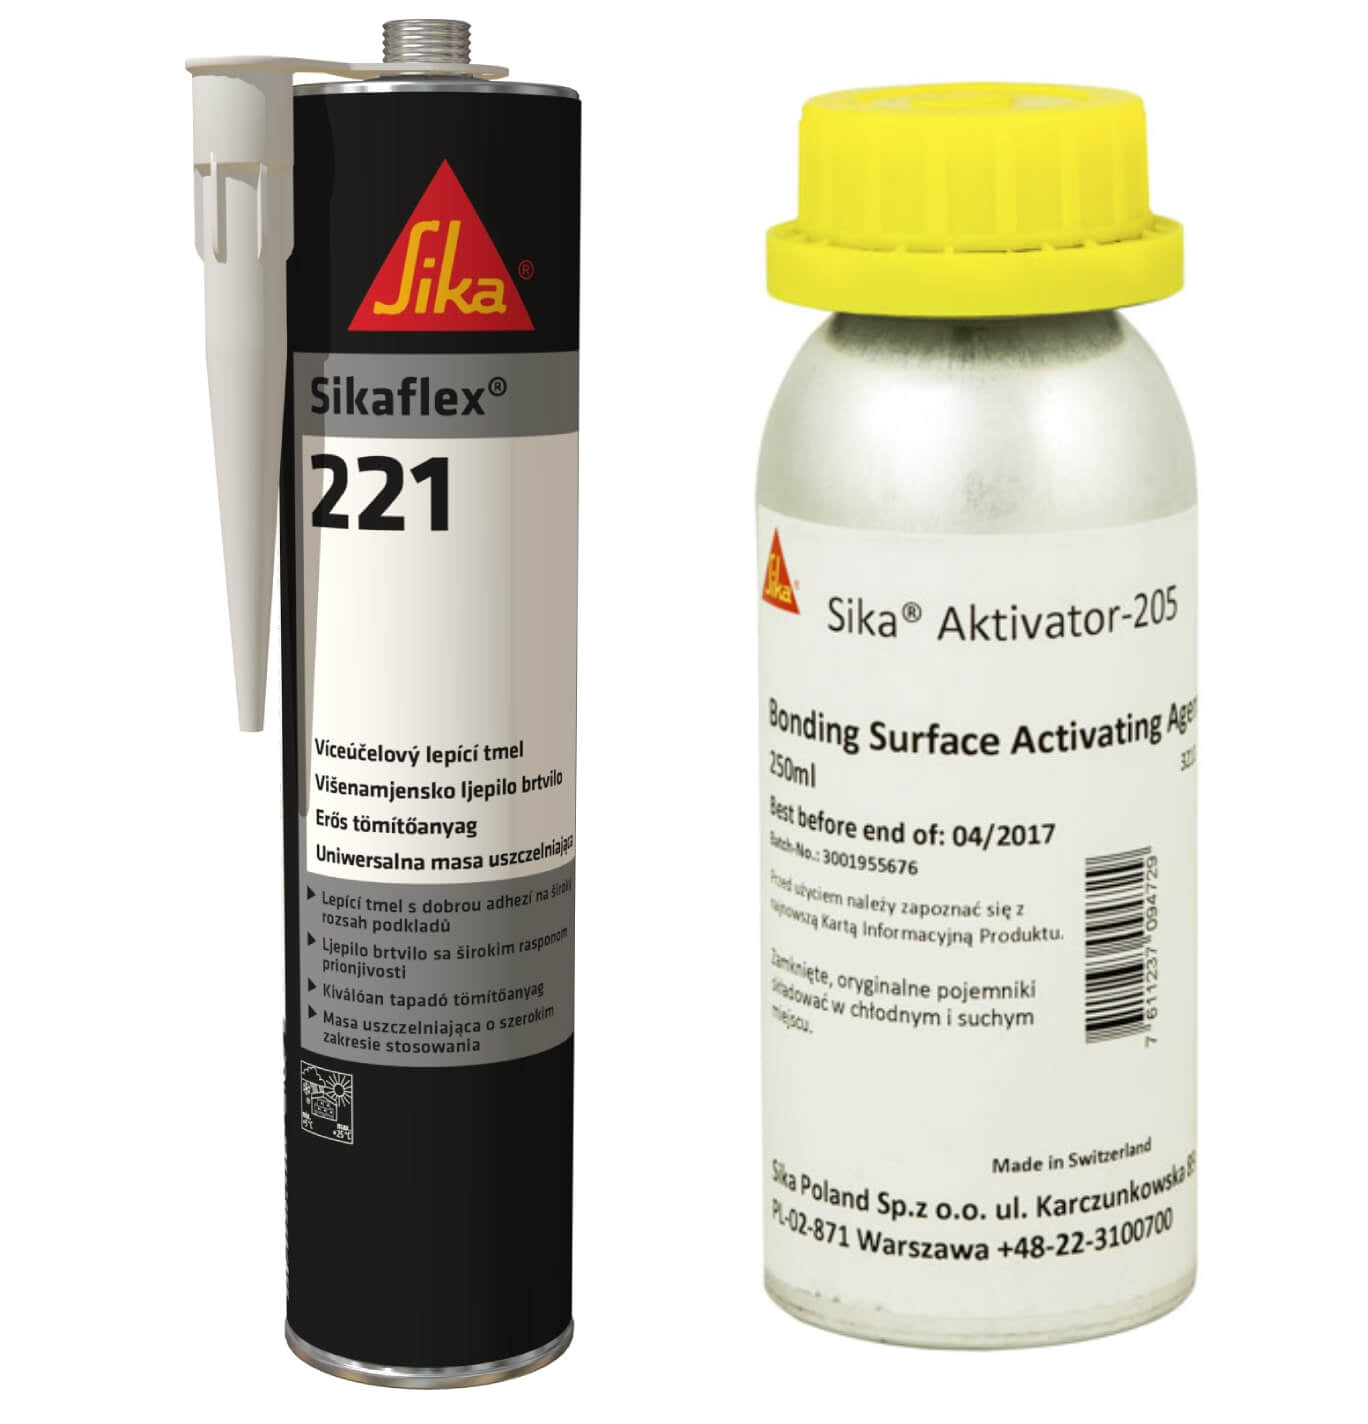 Sikaflex 221 Black Multi Purpose Adhesive Sealant & Aktivator 205 Bundle Image